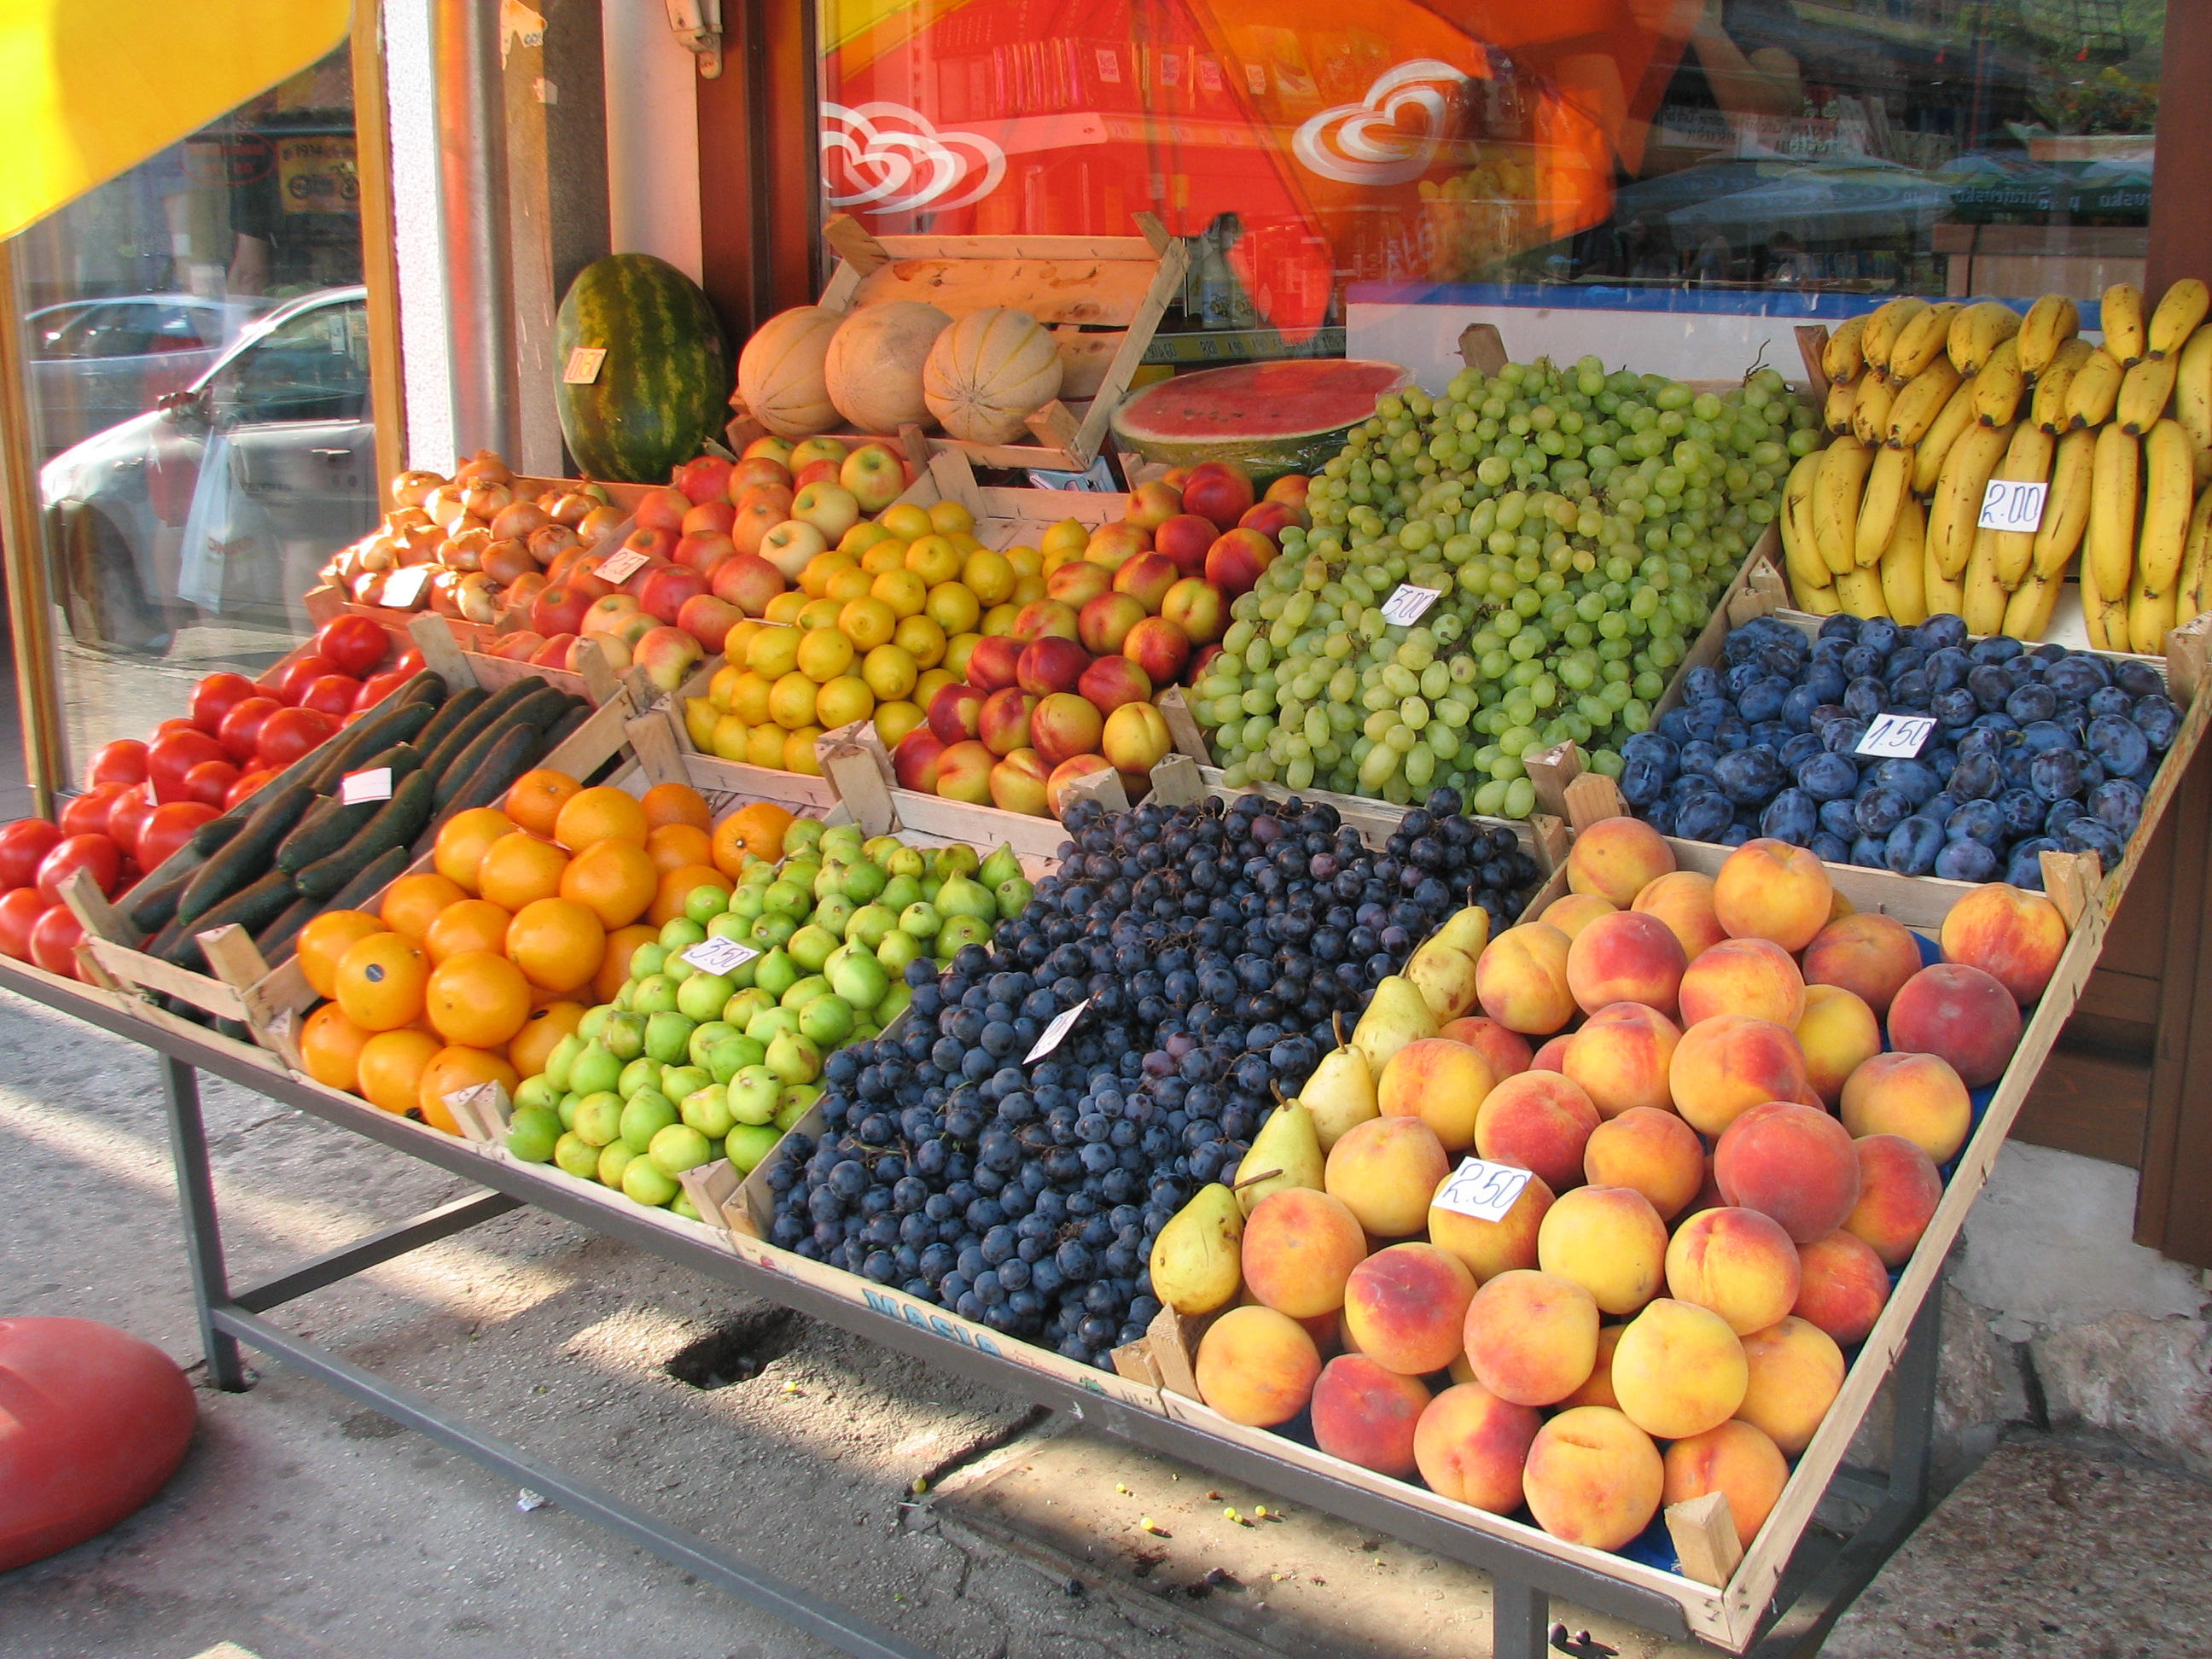 File:Fruit stall, Sarajevo (3887477230).jpg - Wikimedia Commons